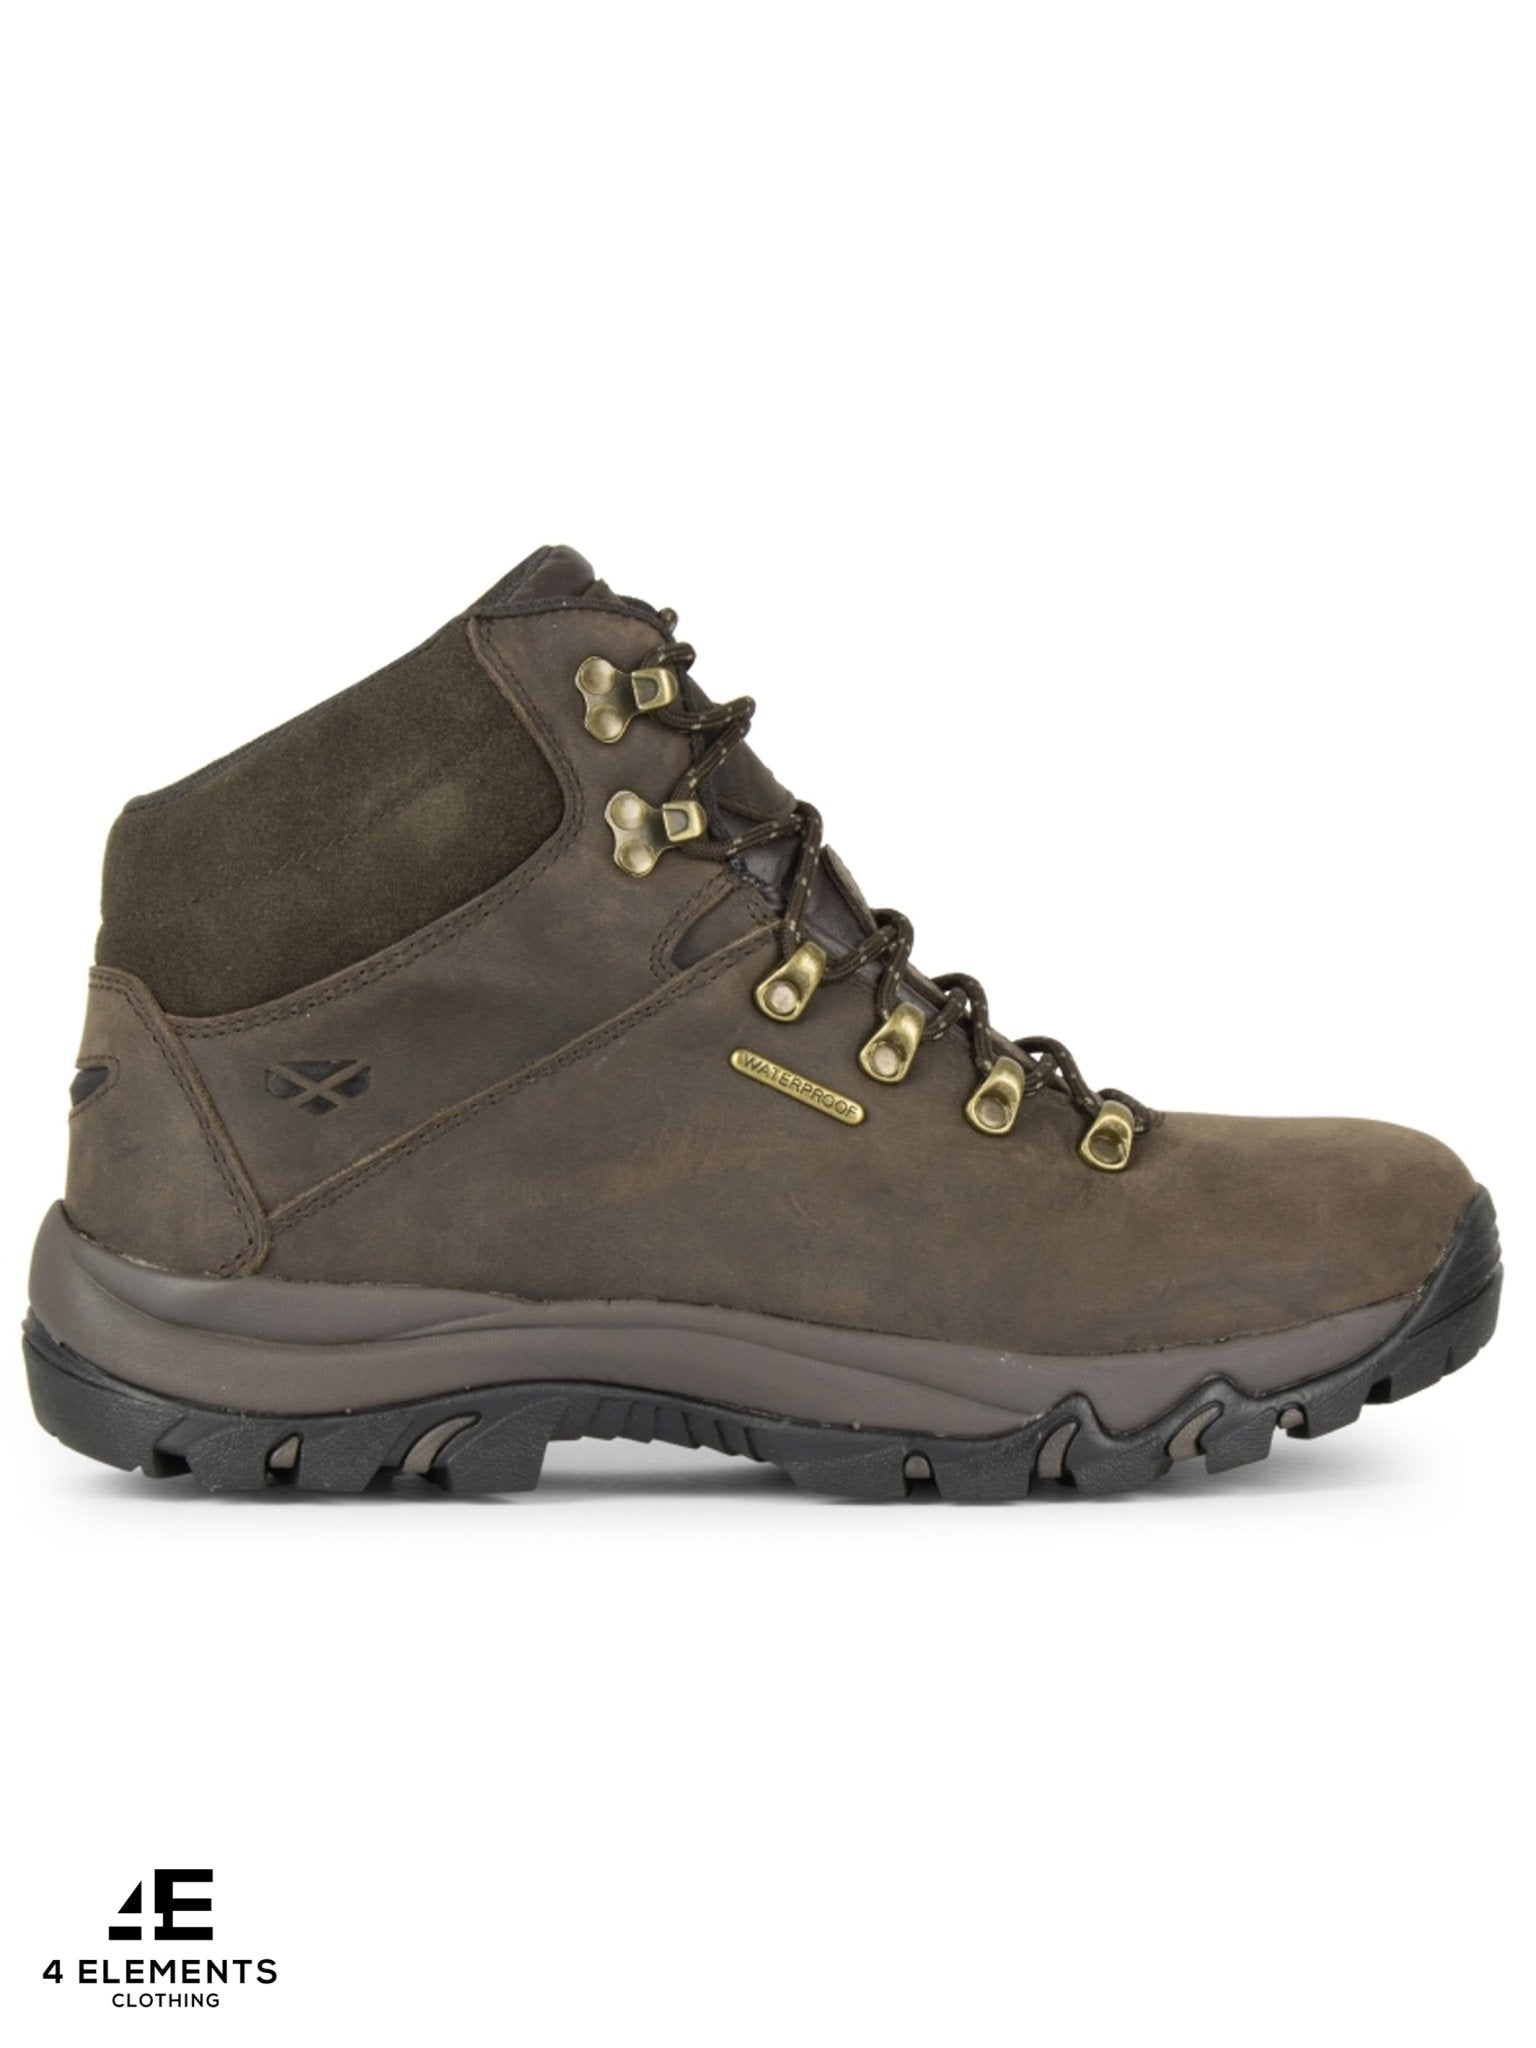 Hoggs of Fife Hoggs of Fife - Waterproof leather walking Boot / waterproof hiking boot - Glencoe Boots